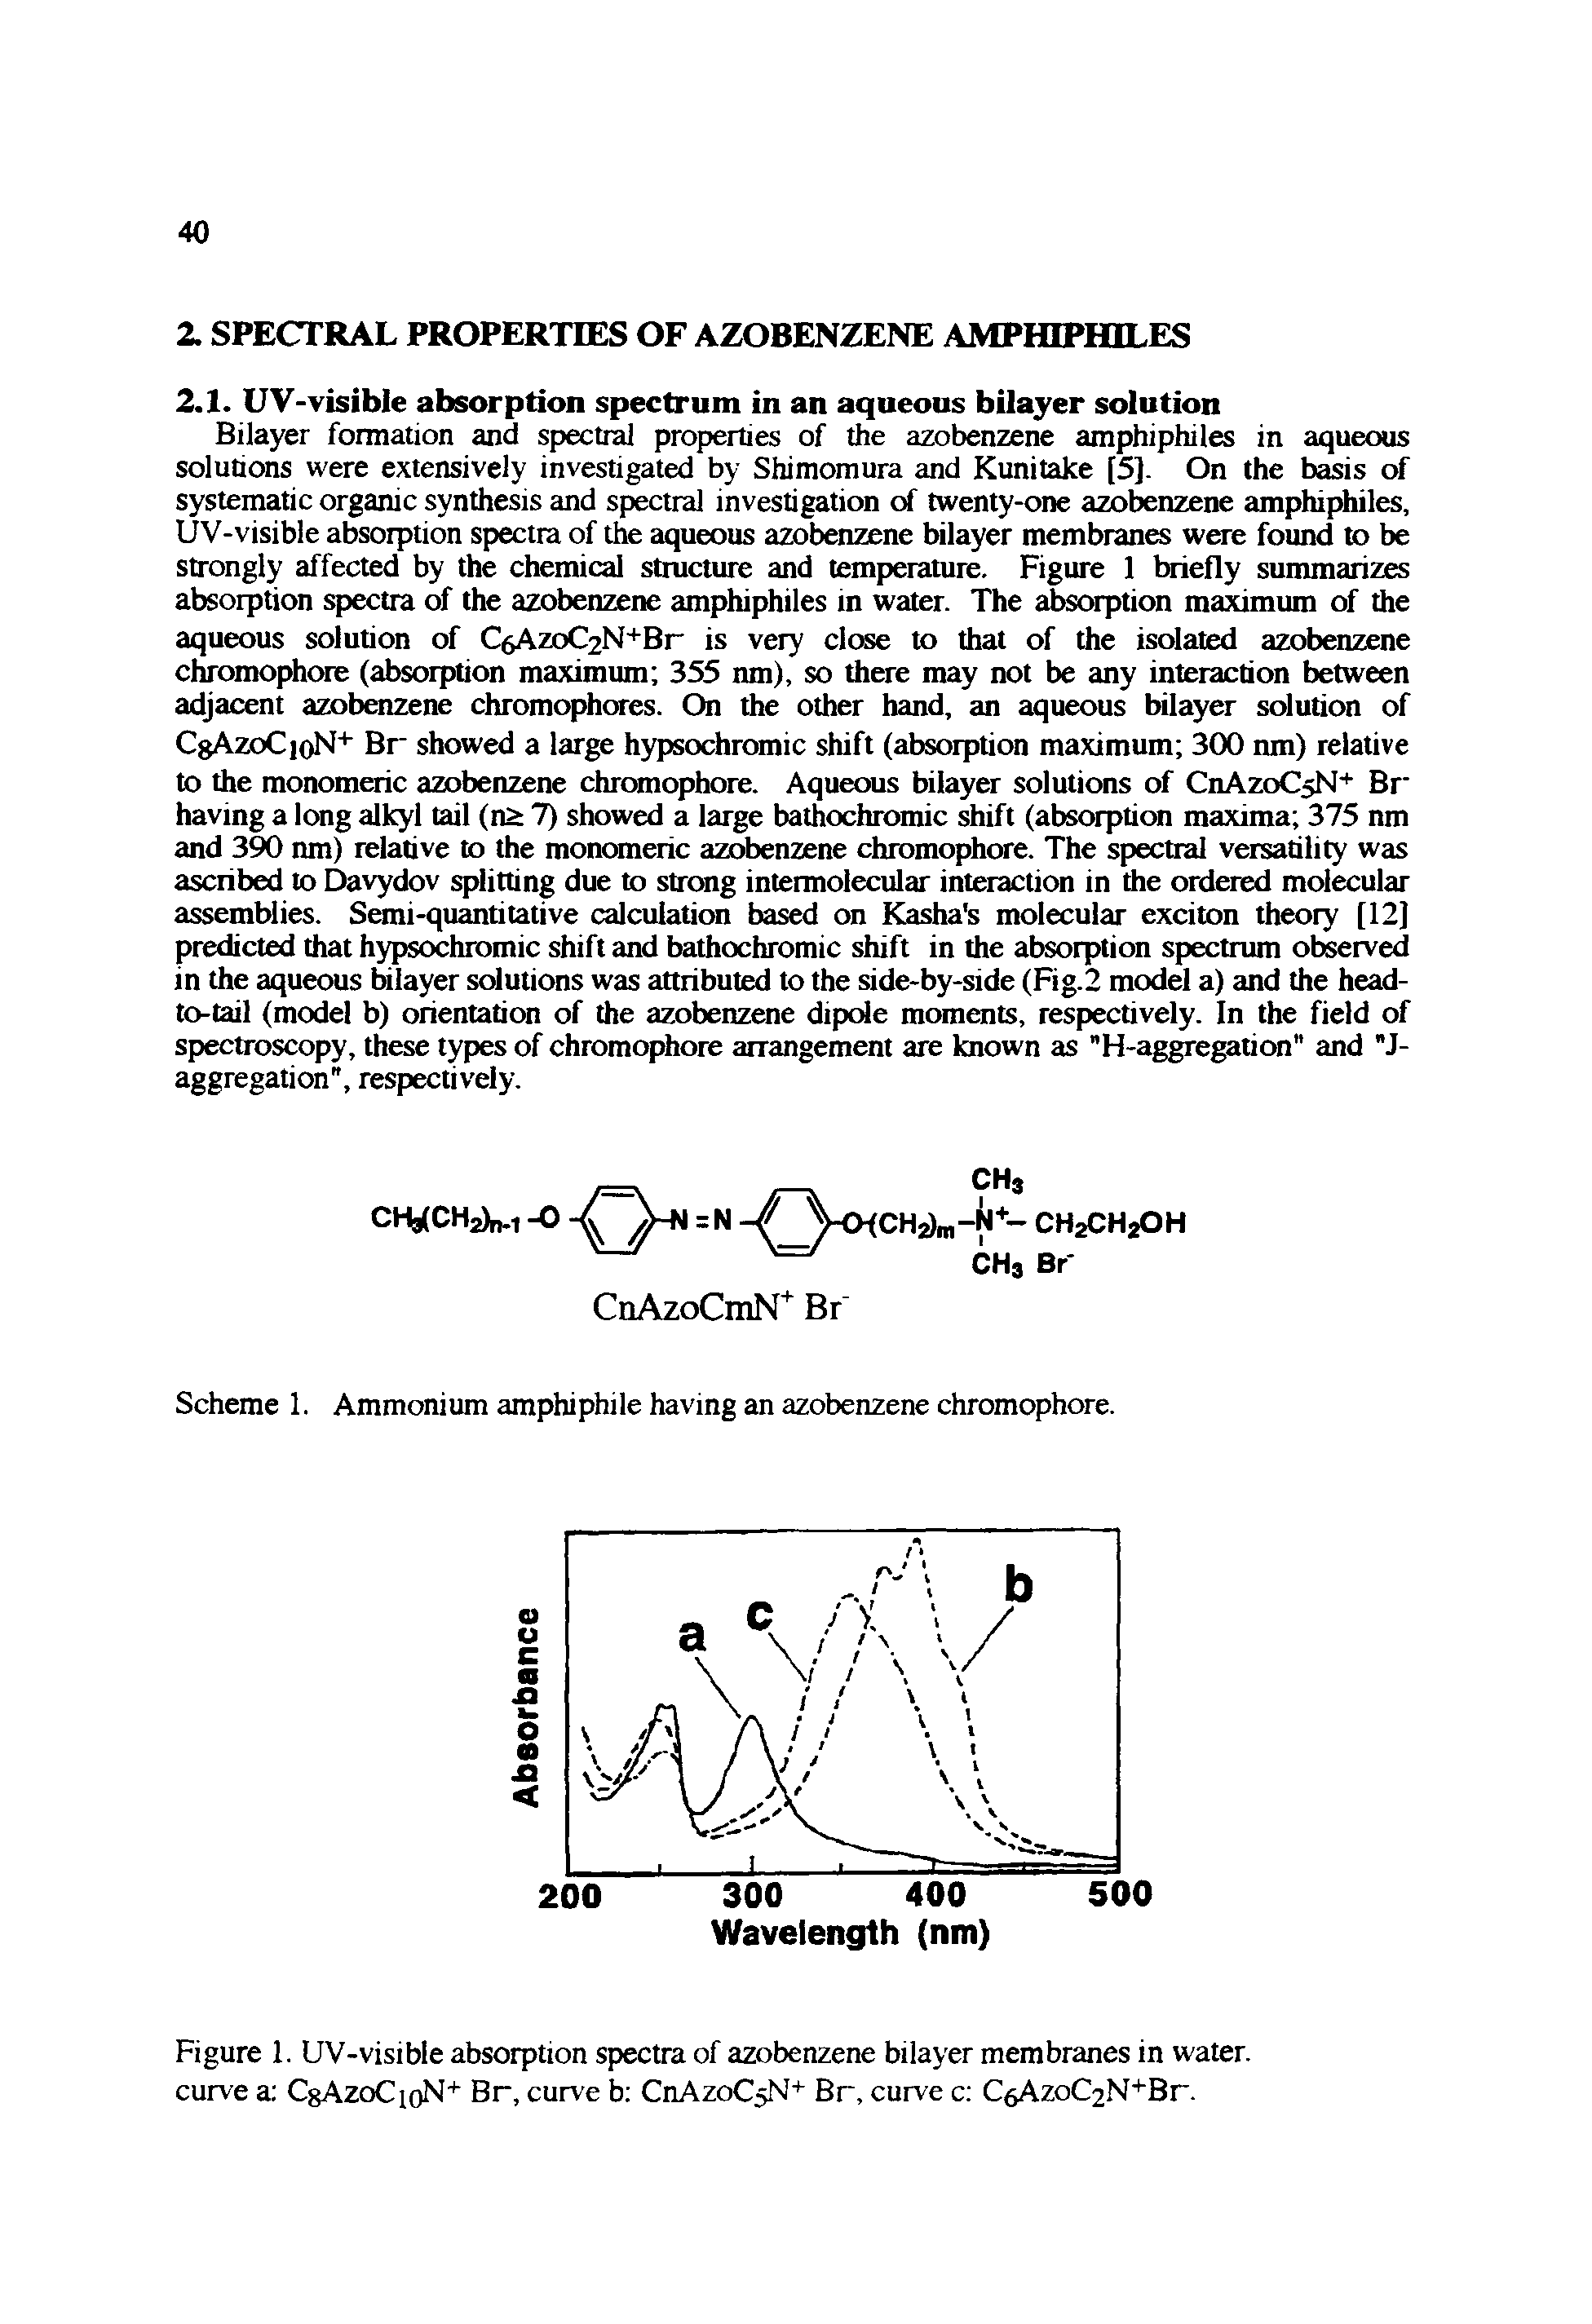 Scheme 1. Ammonium amphiphile having an azobenzene chromophore.